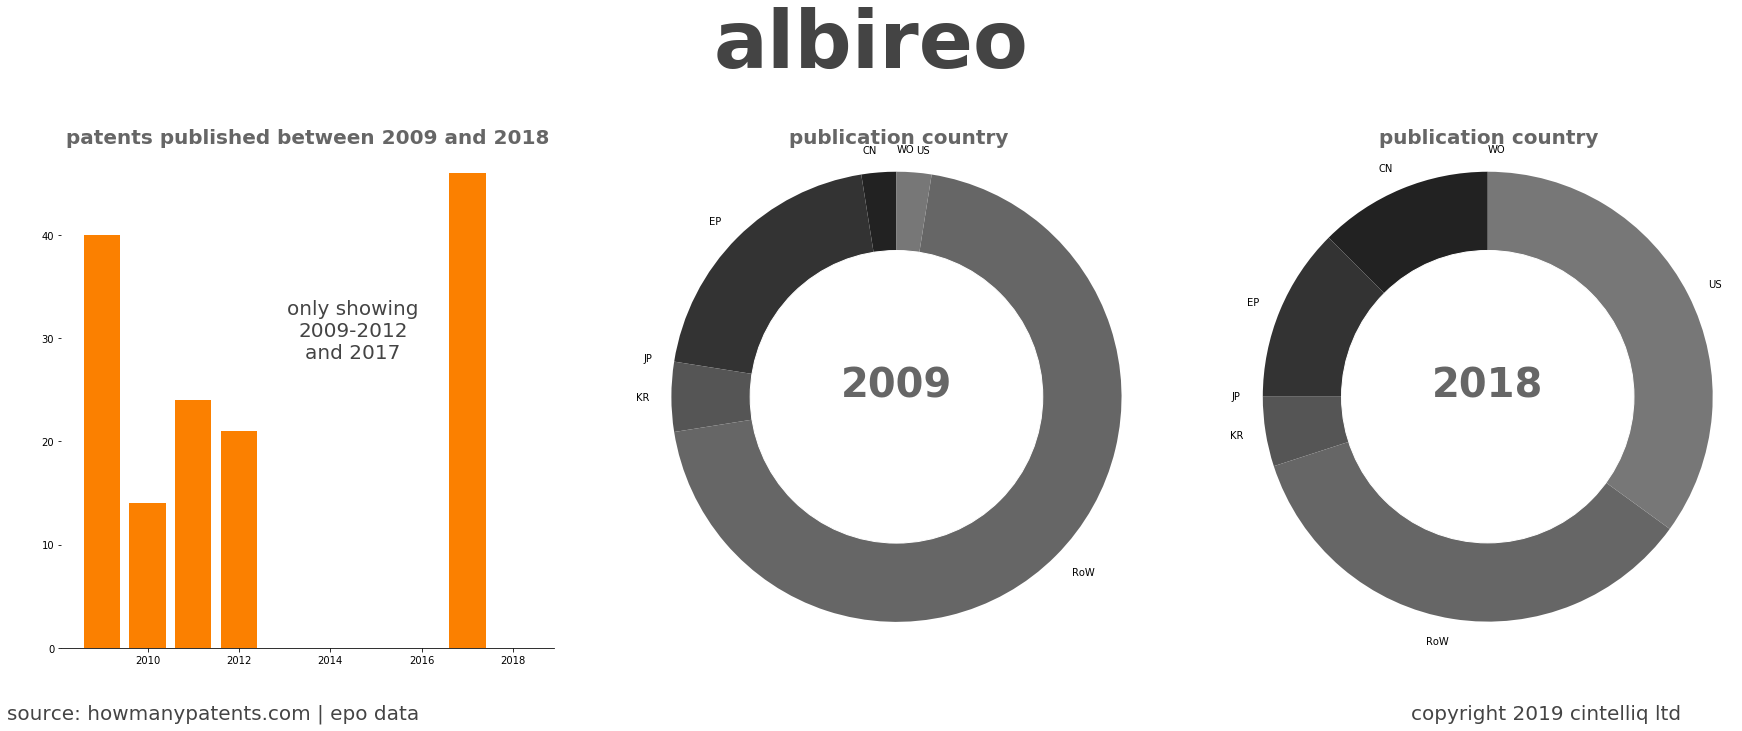 summary of patents for Albireo